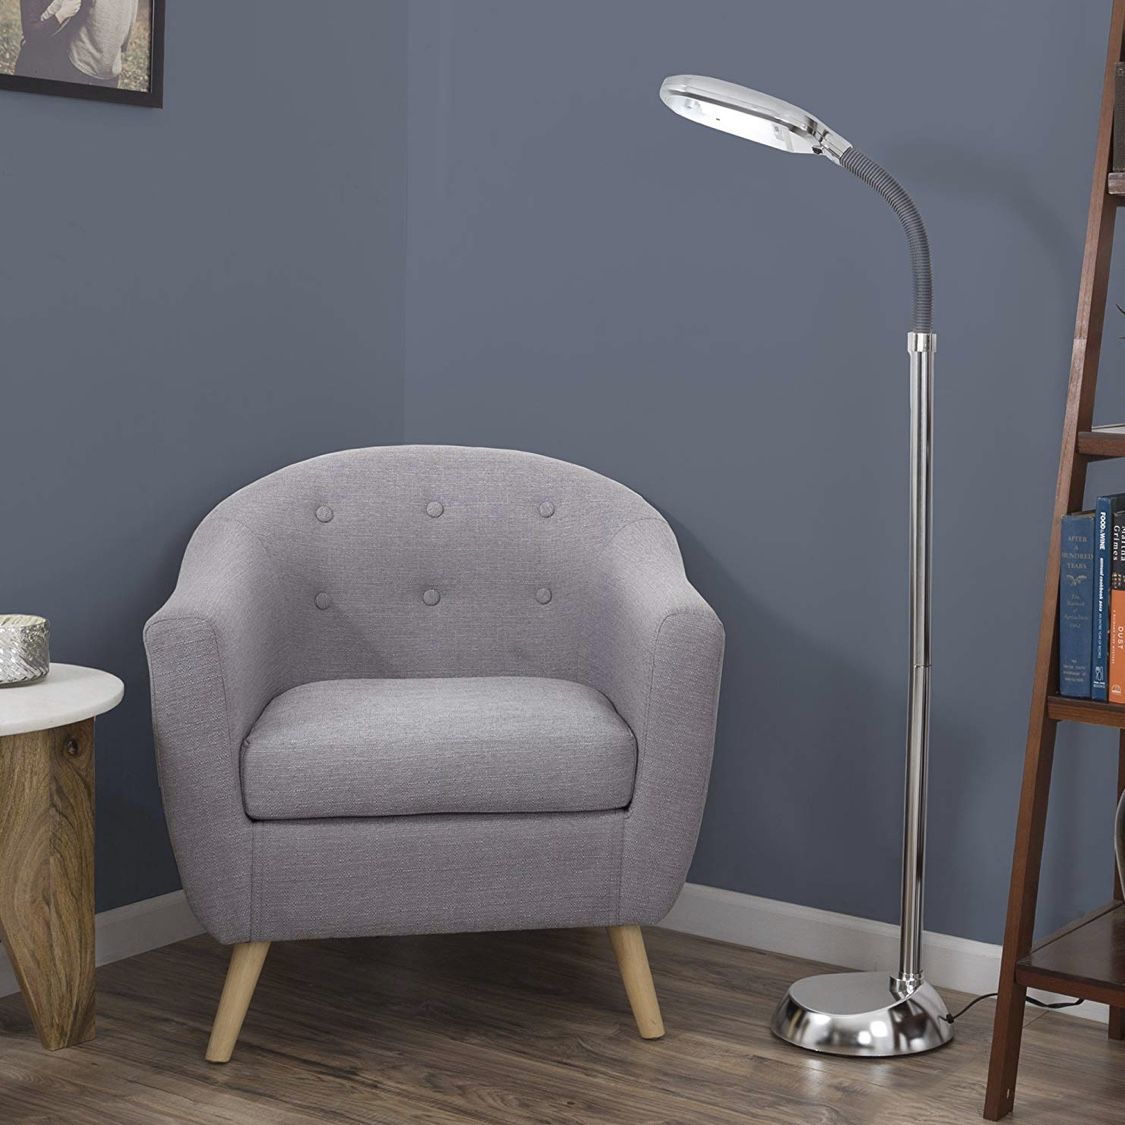 5 Feet Sunlight Floor Lamp With Adjustable Gooseneck - Silver💡